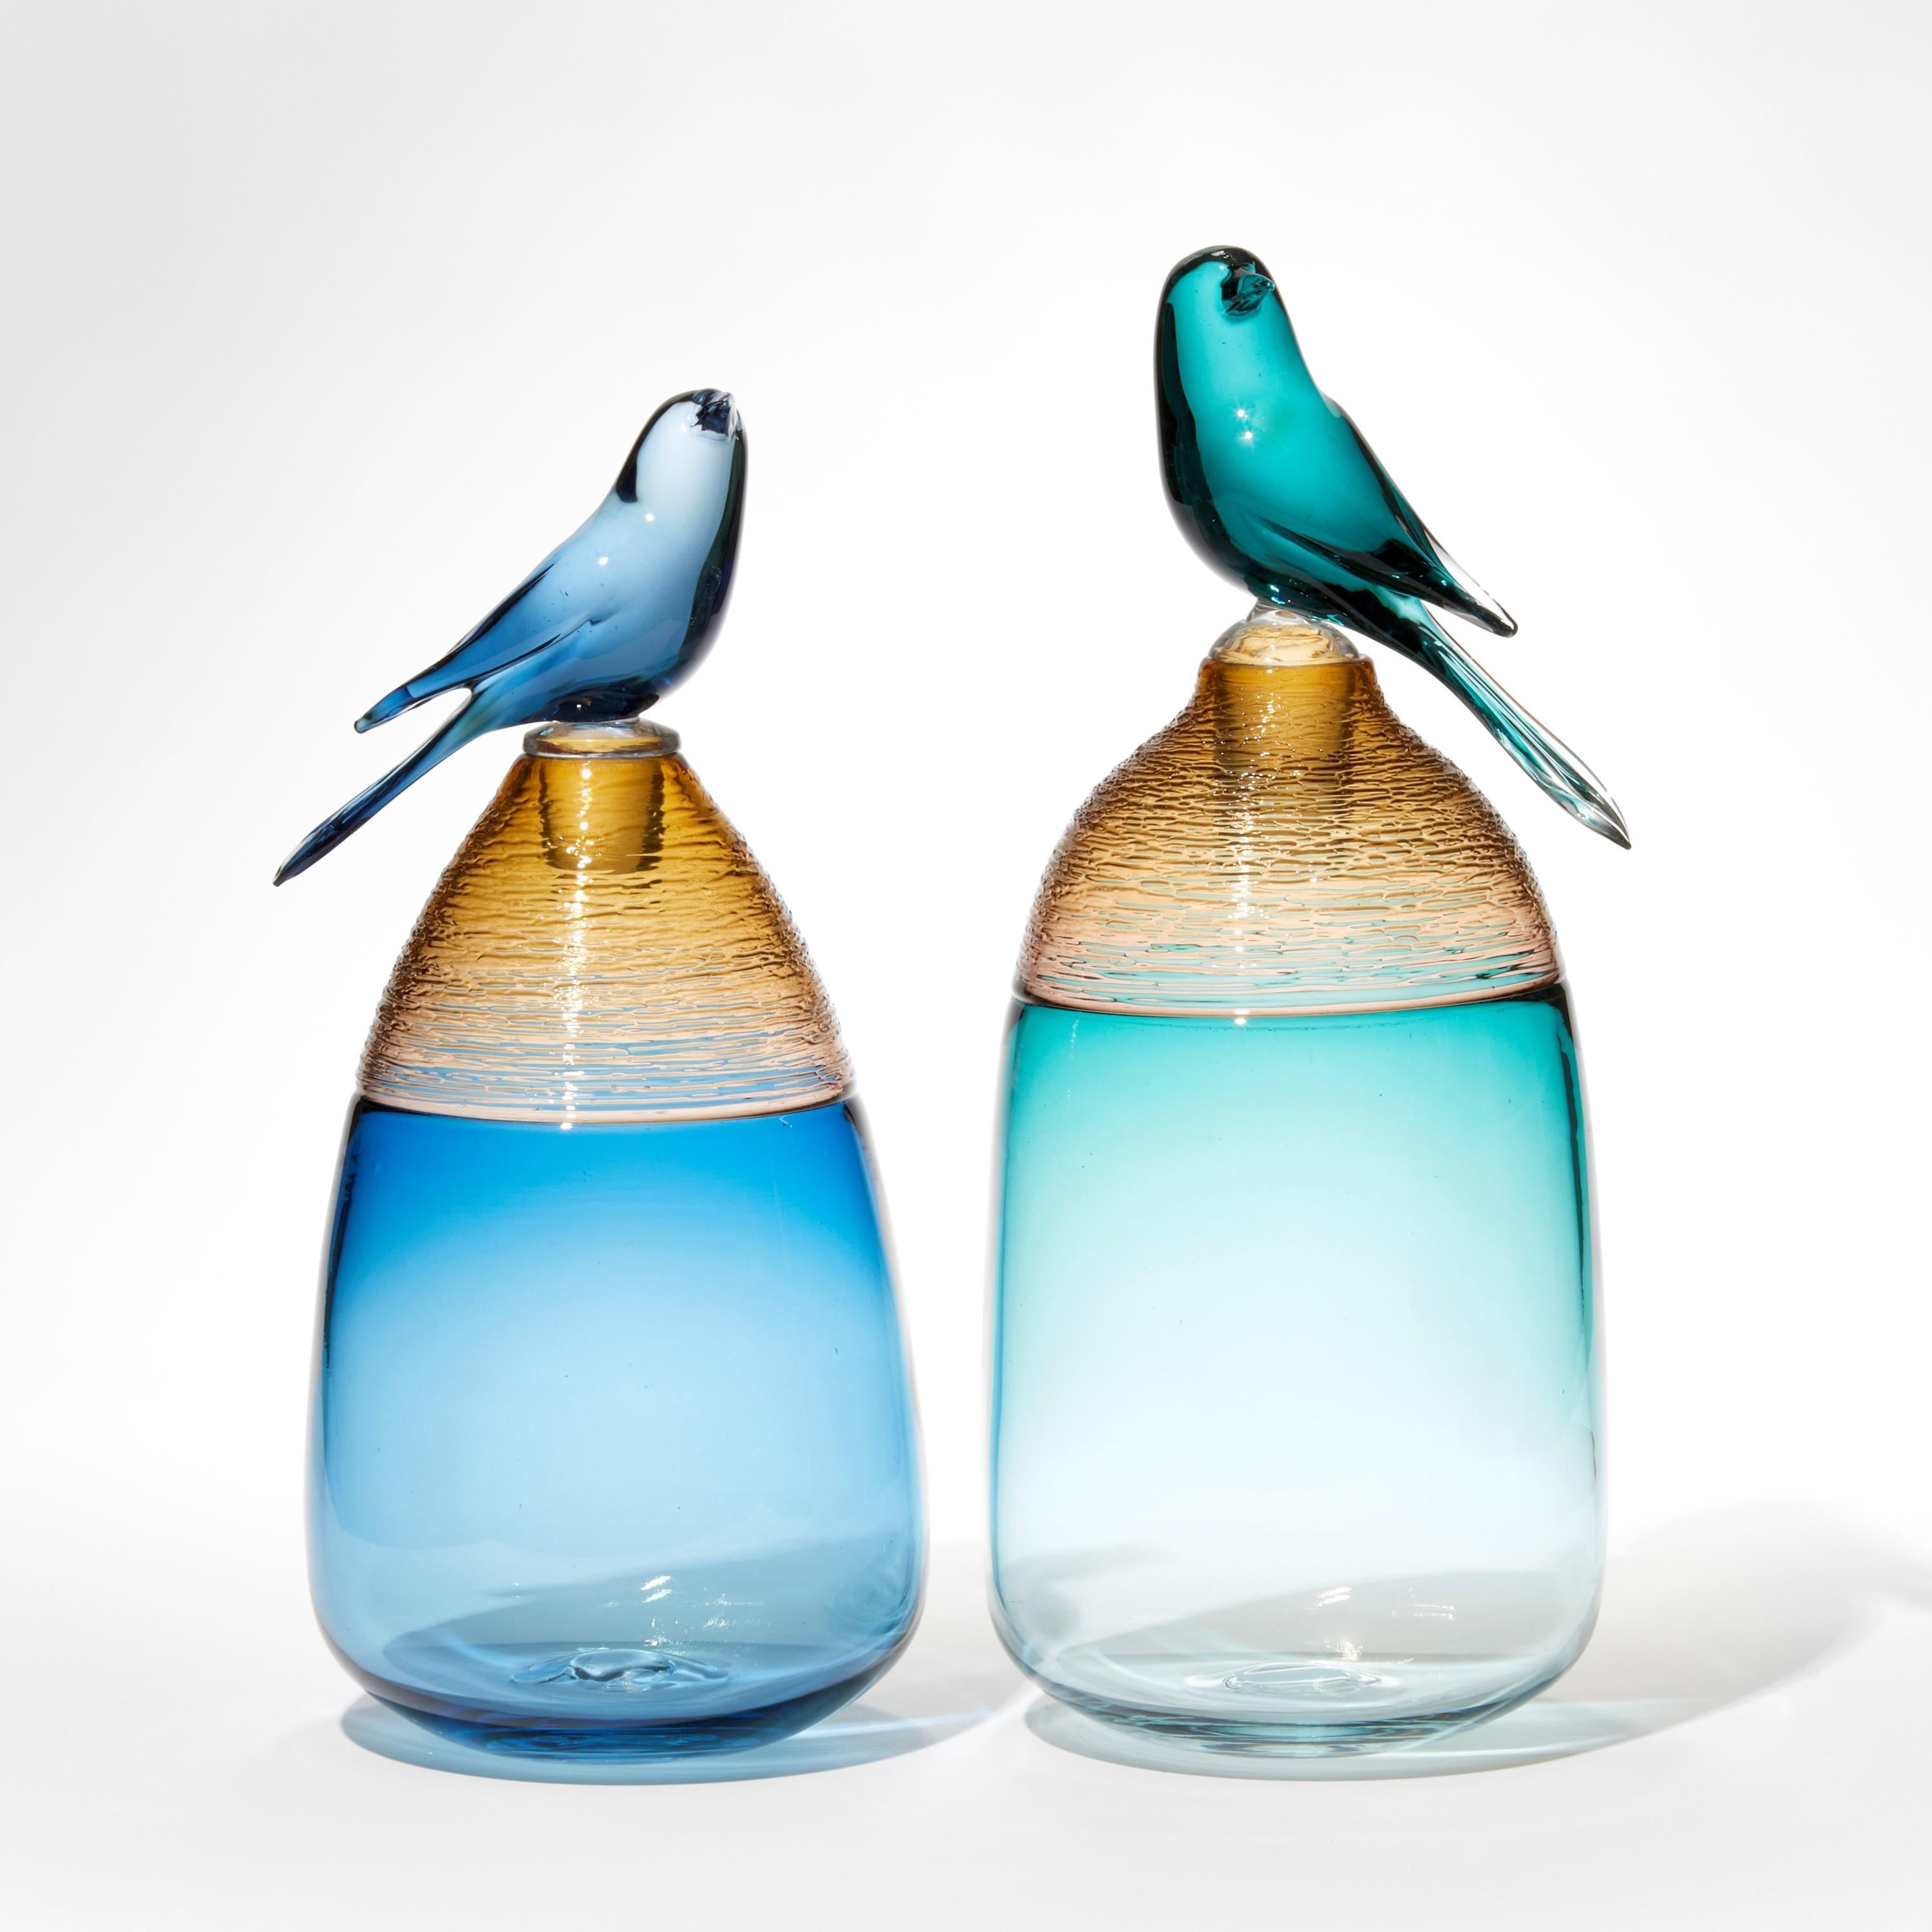 French All About Birds XIX, blue & amber glass bird themed sculpture by Julie Johnson